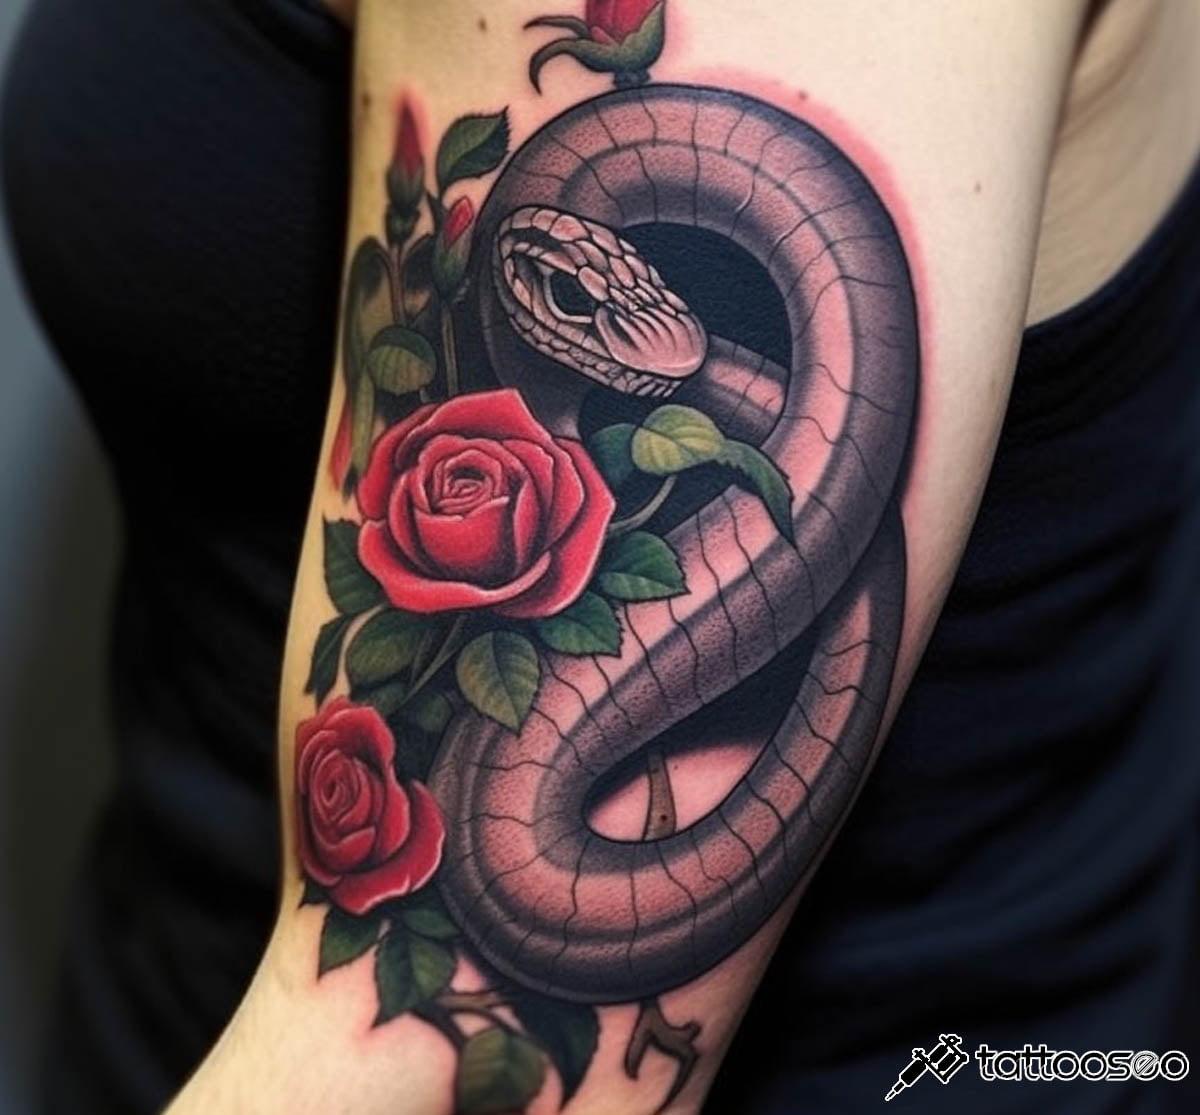 Rose and snake tattoo | Snake tattoo, Cute tattoos, Tattoos